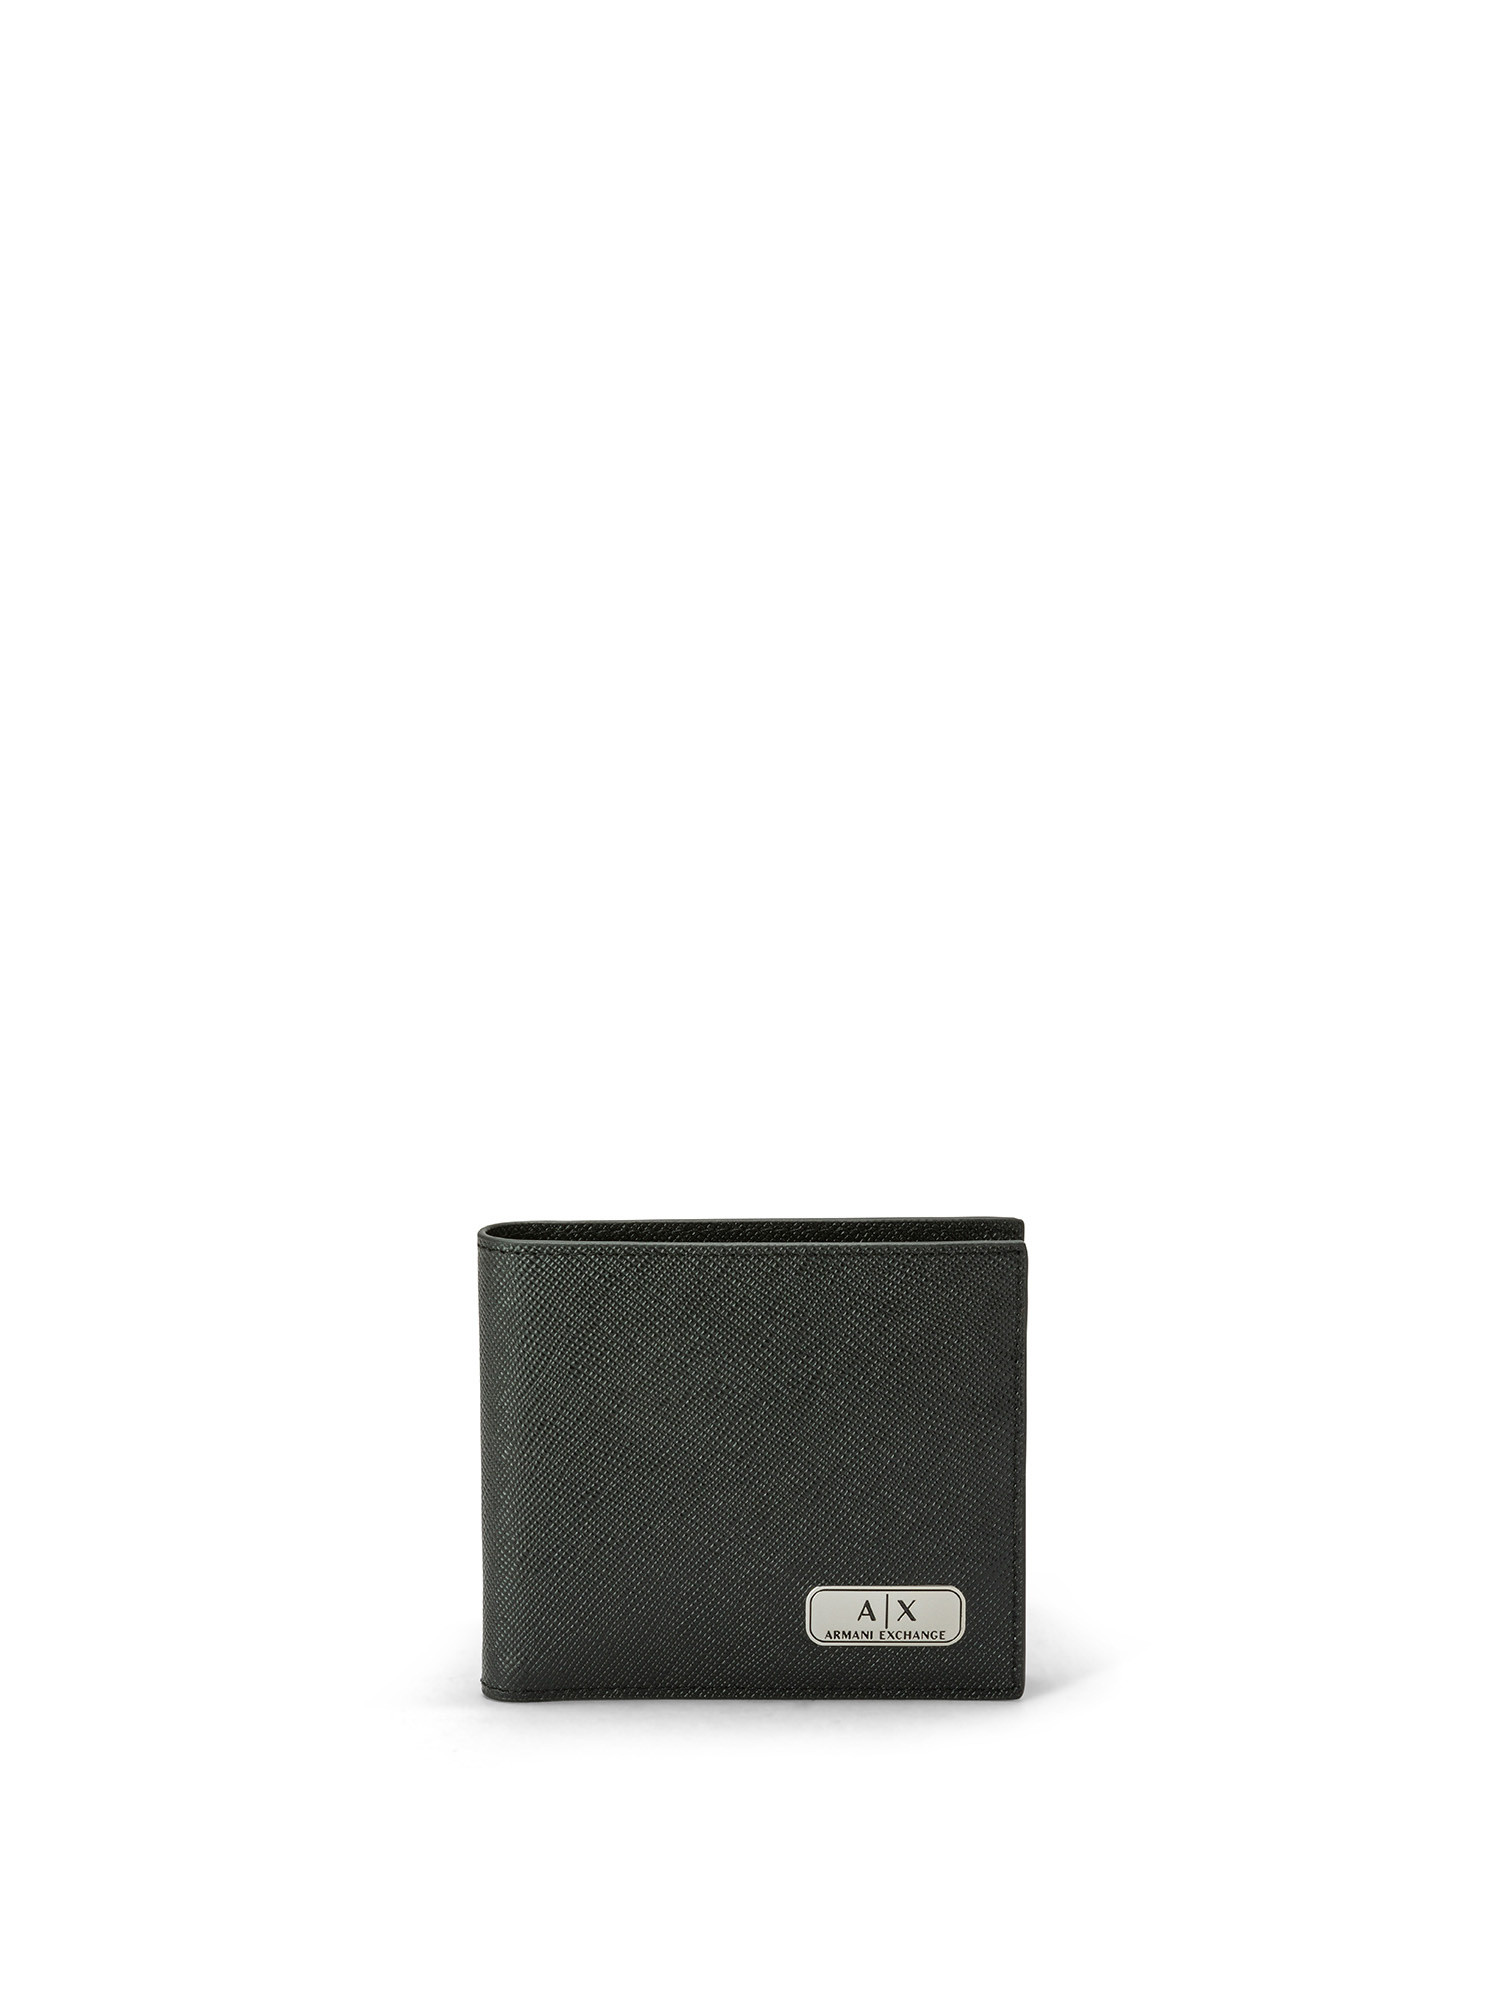 Armani Exchange - Leather wallet, Black, large image number 0